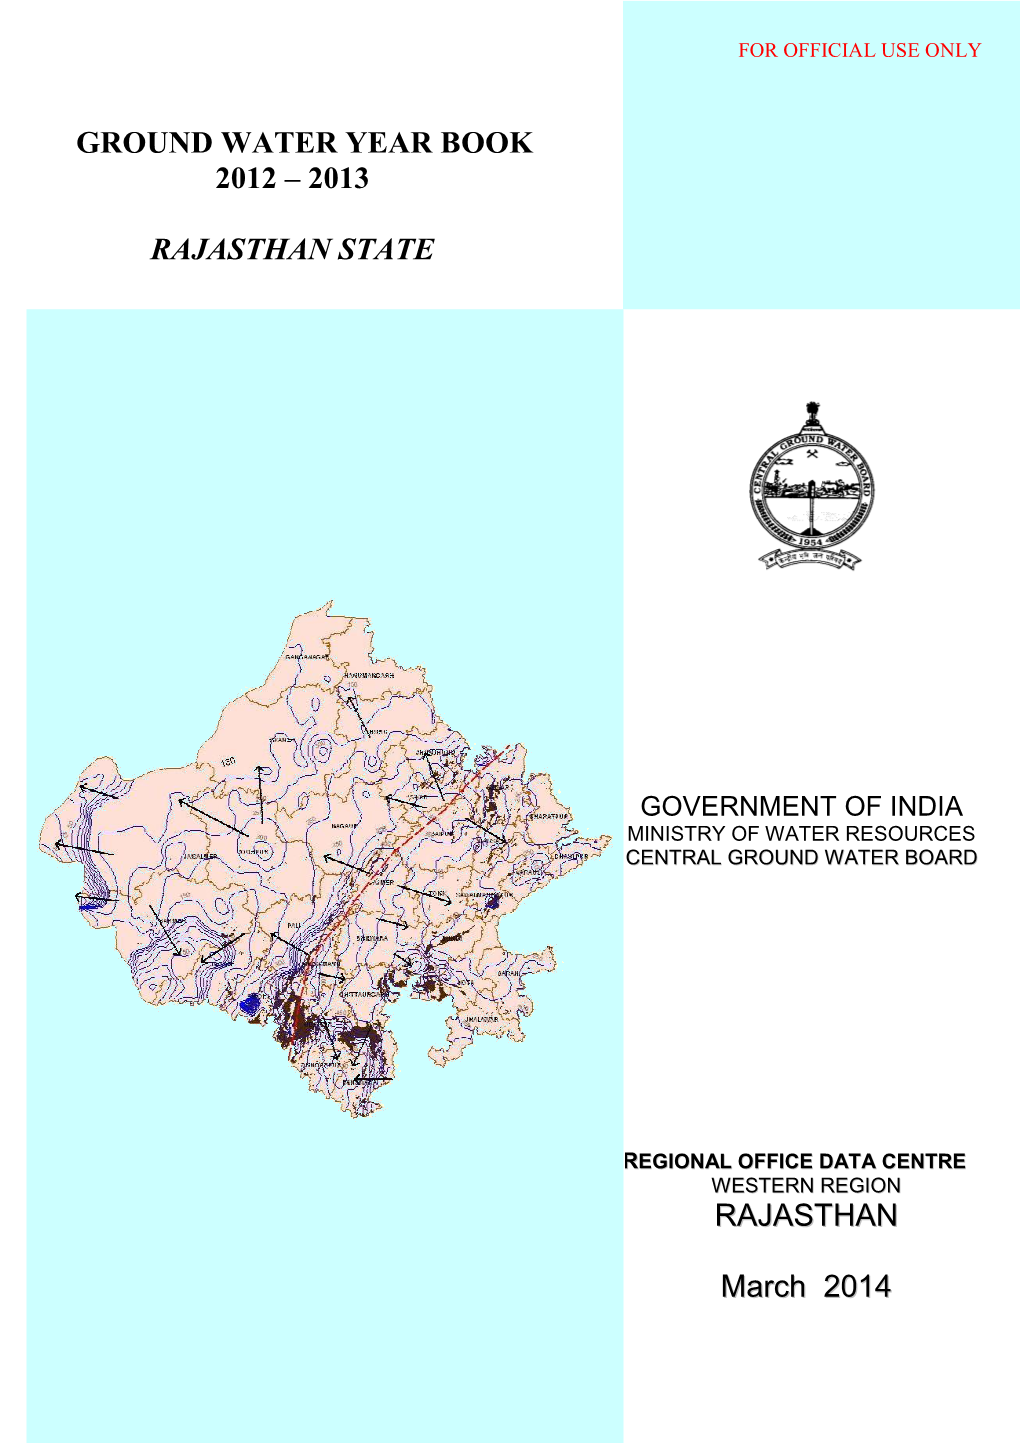 RAJASTHAN March 2014 GROUND WATER YEAR BOOK 2012 – 2013